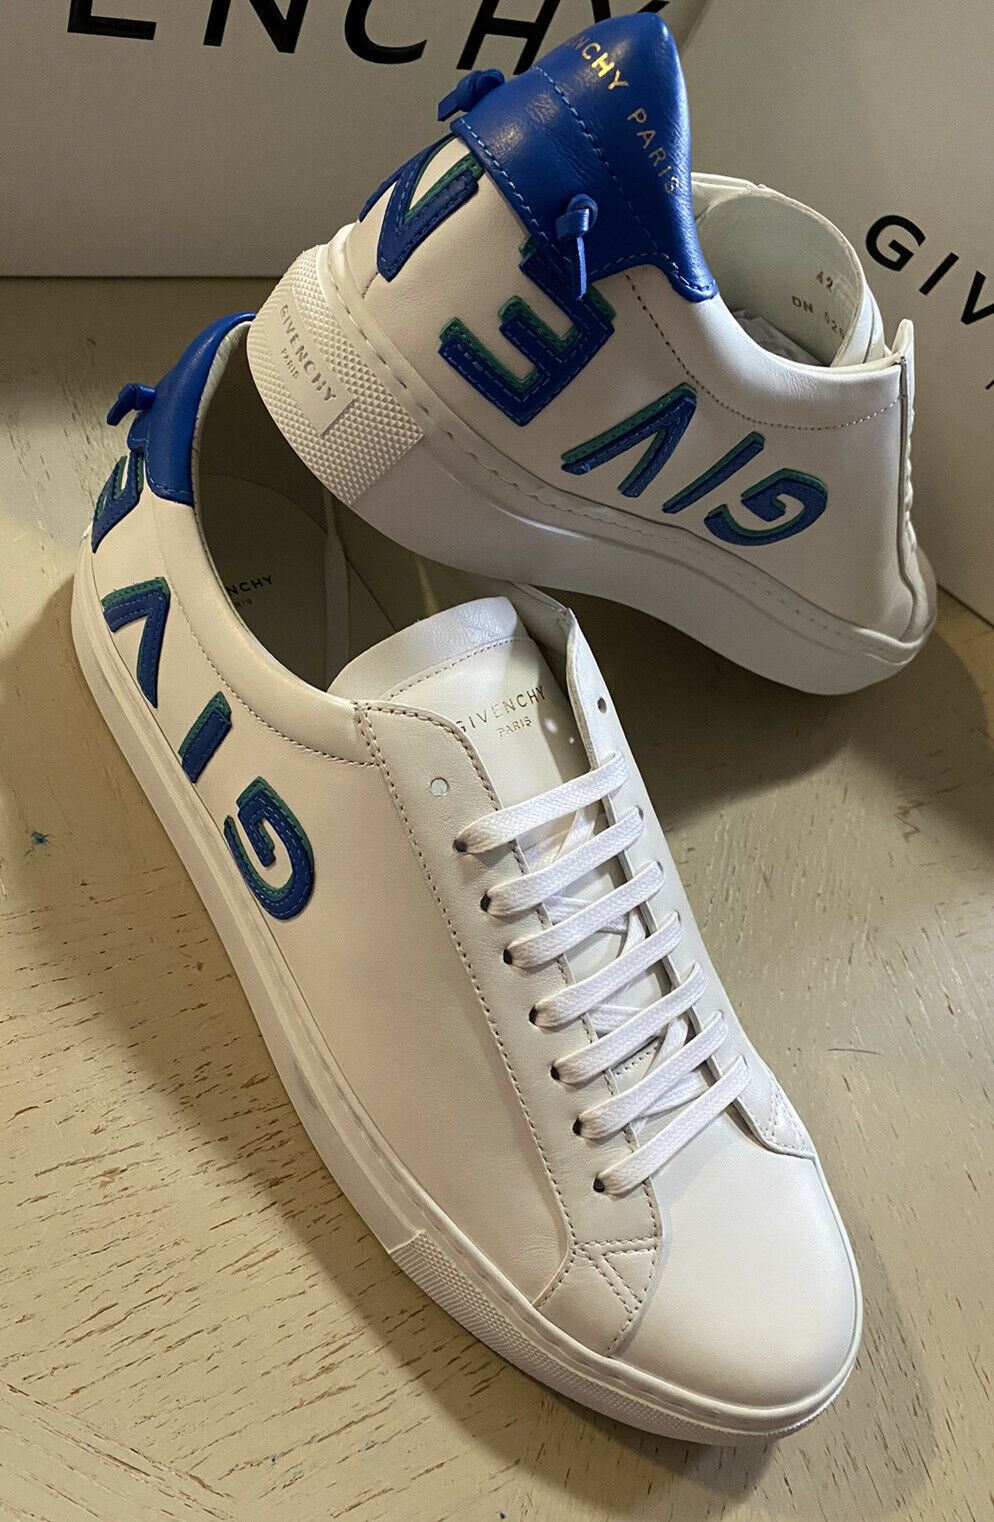 NIB Givenchy Herren Leder Urban Street Sneakers Schuhe Weiß/Blau 9 US / 42 EU